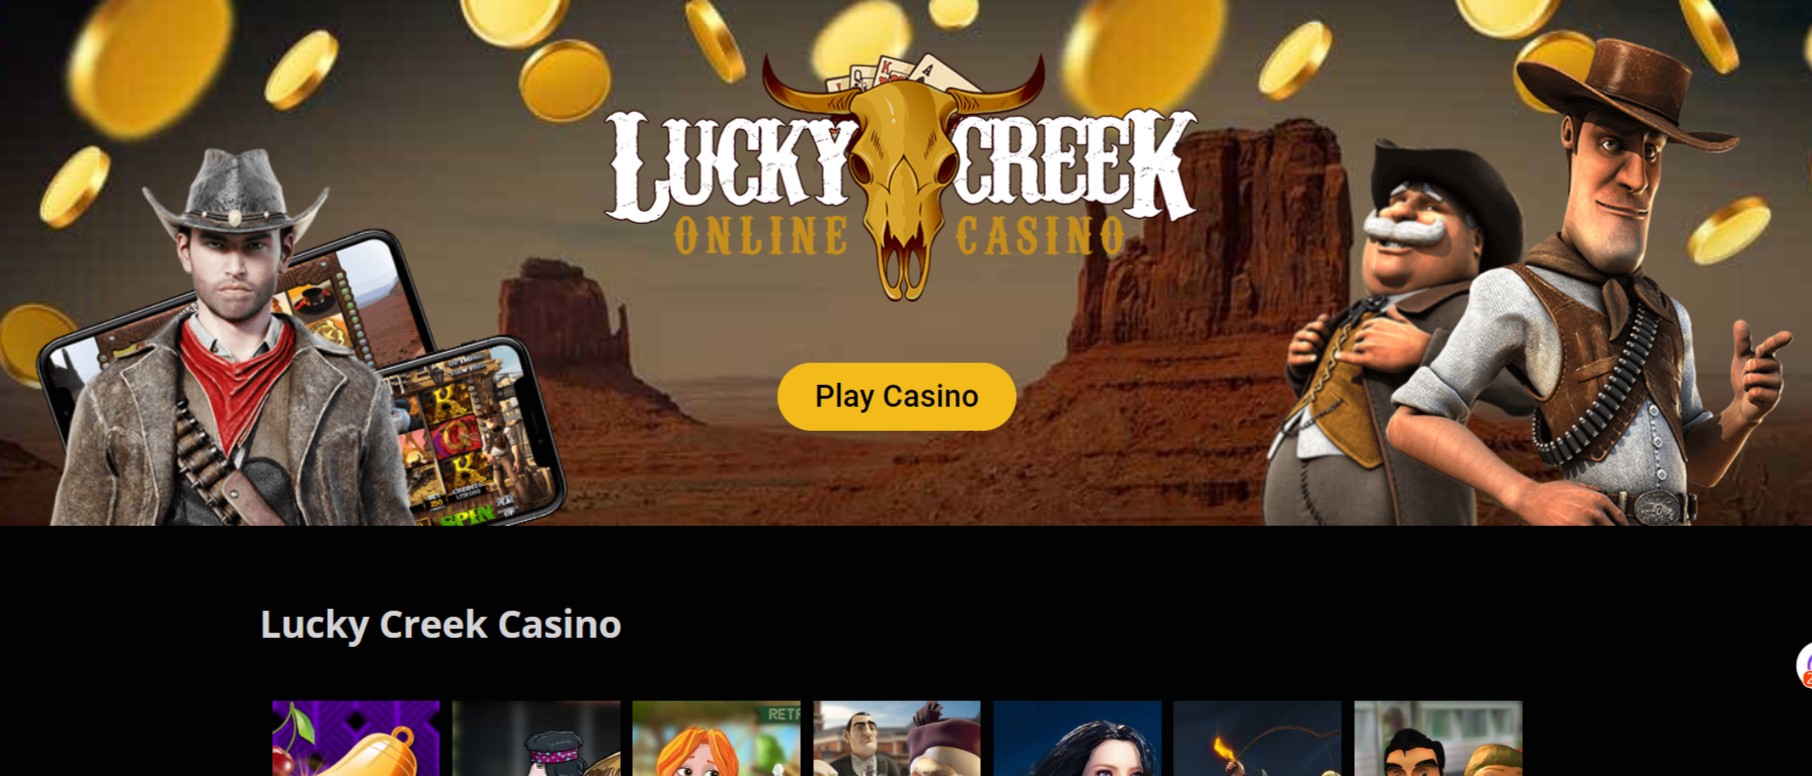 lucky creek casino website homepage screenshot